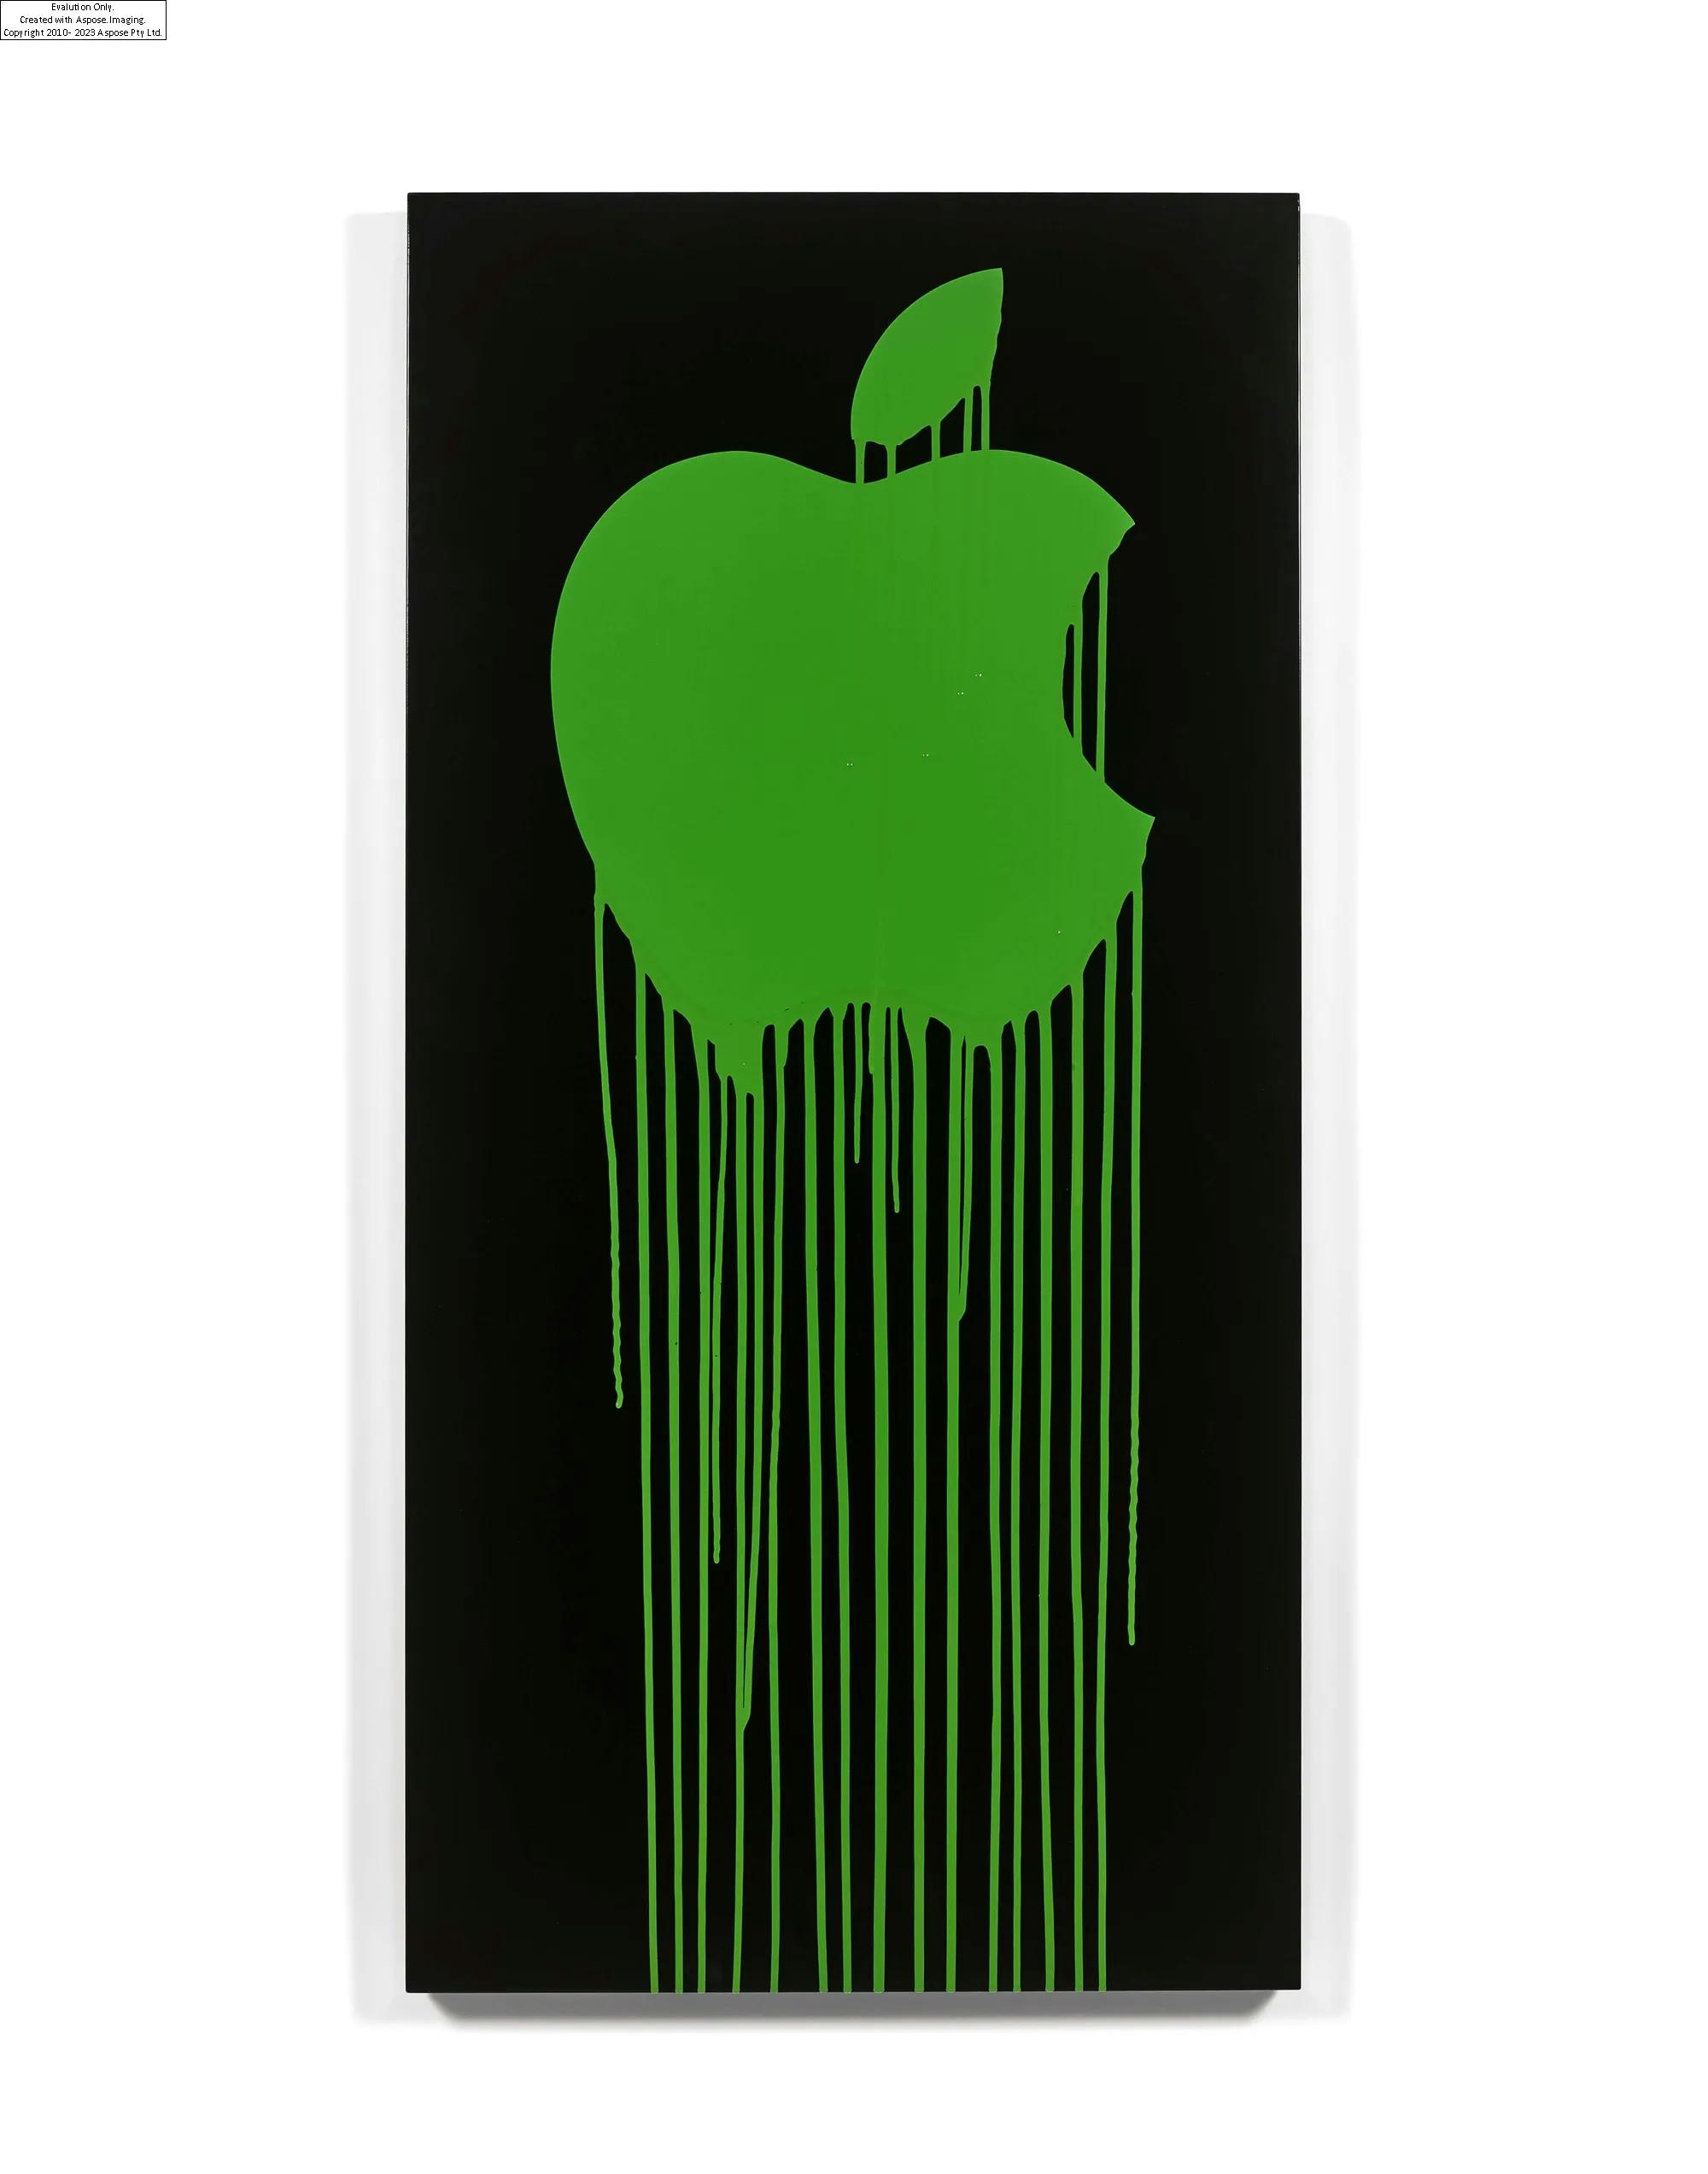 Liquidated Apple (Black) - 2013 - ZEVS